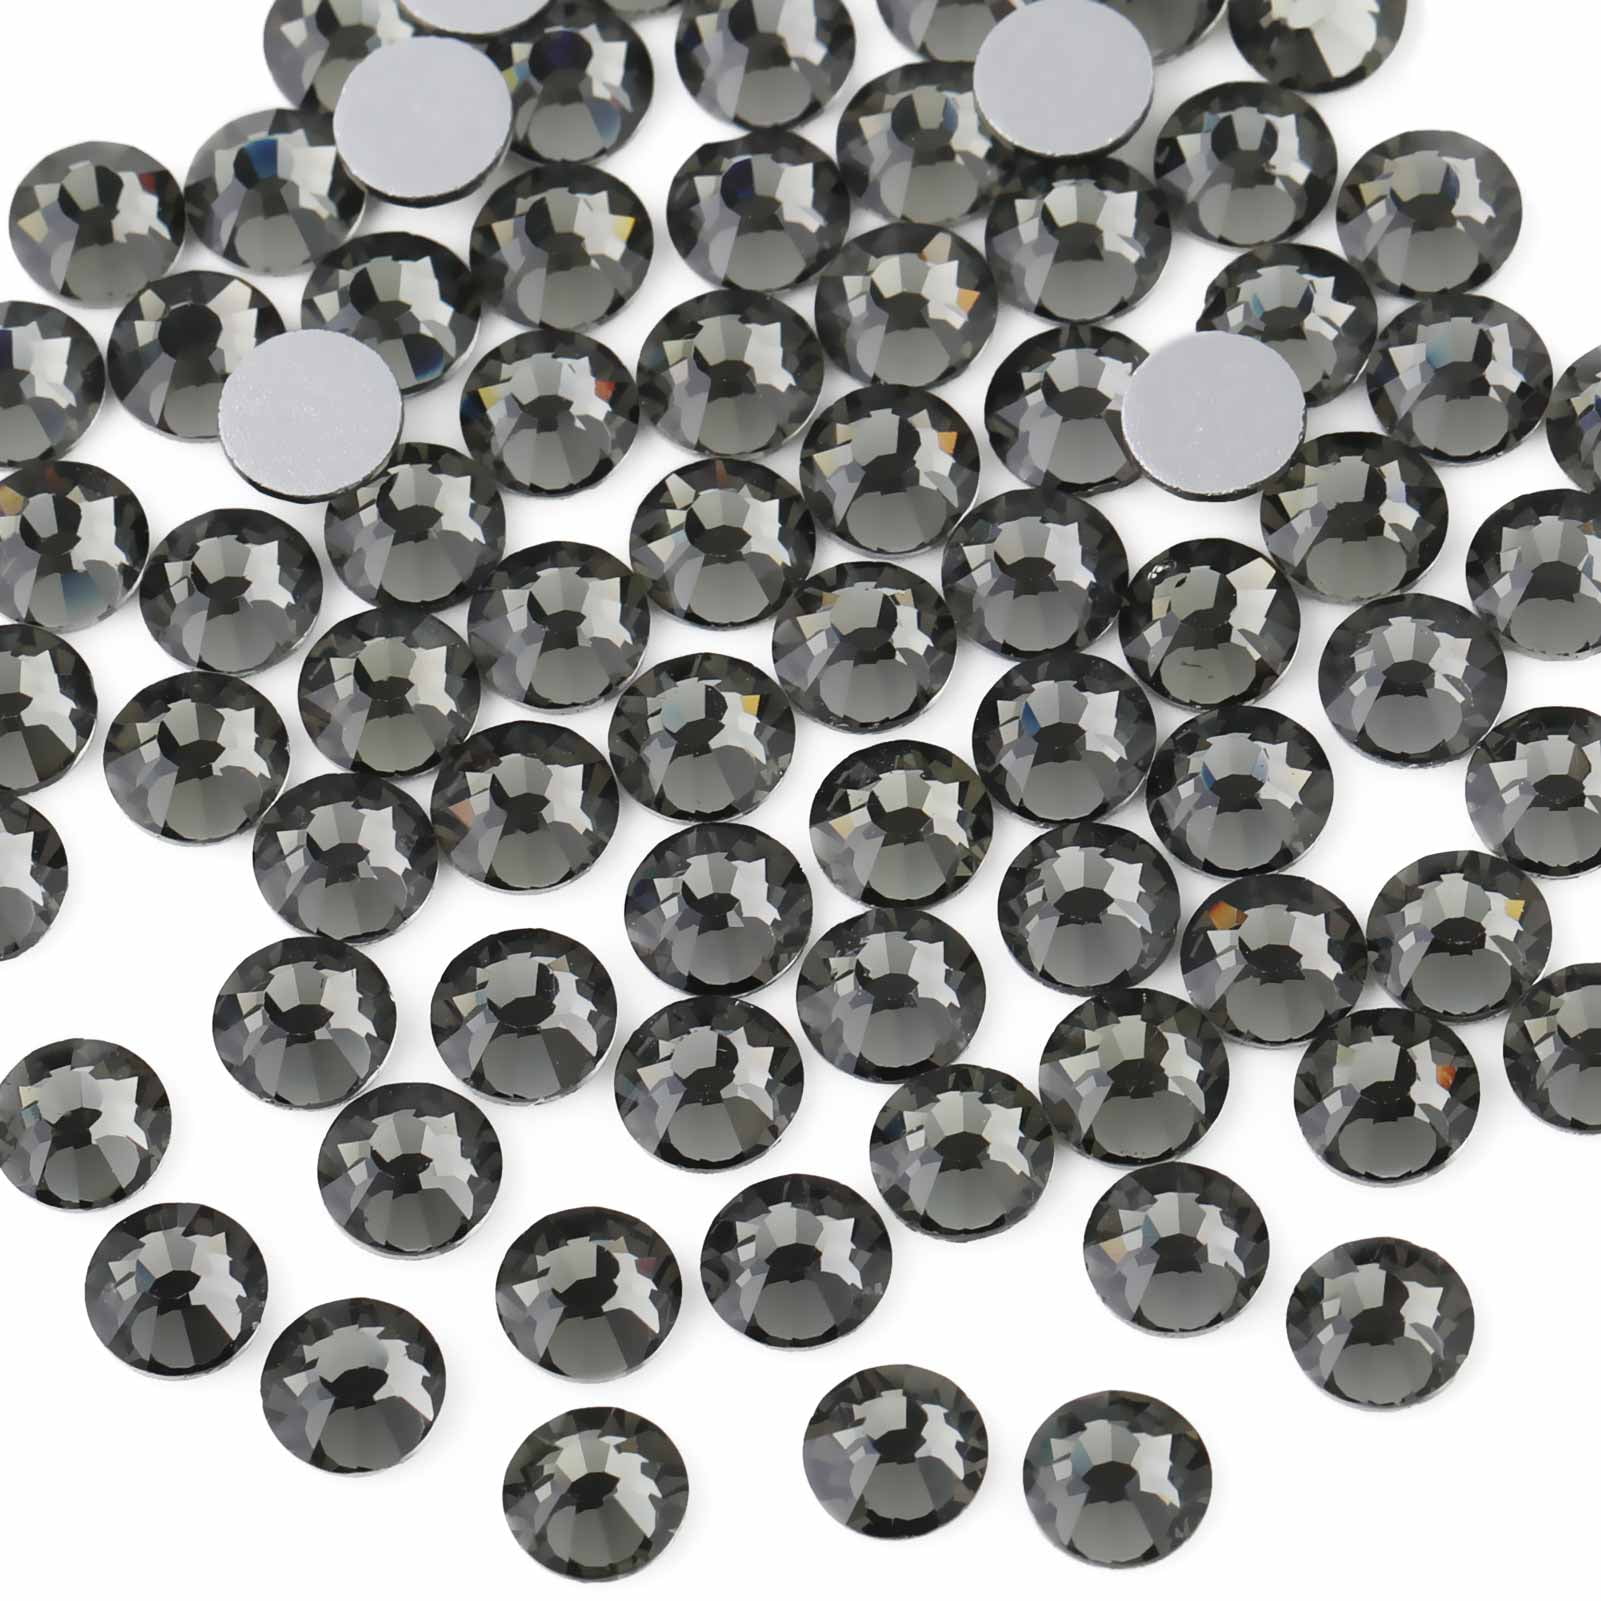  Beadsland Hotfix Rhinestones, 144pcs Flatback Crystal  Rhinestones for Crafts Clothes DIY Decoration, Black, SS40, 8.3-8.6mm